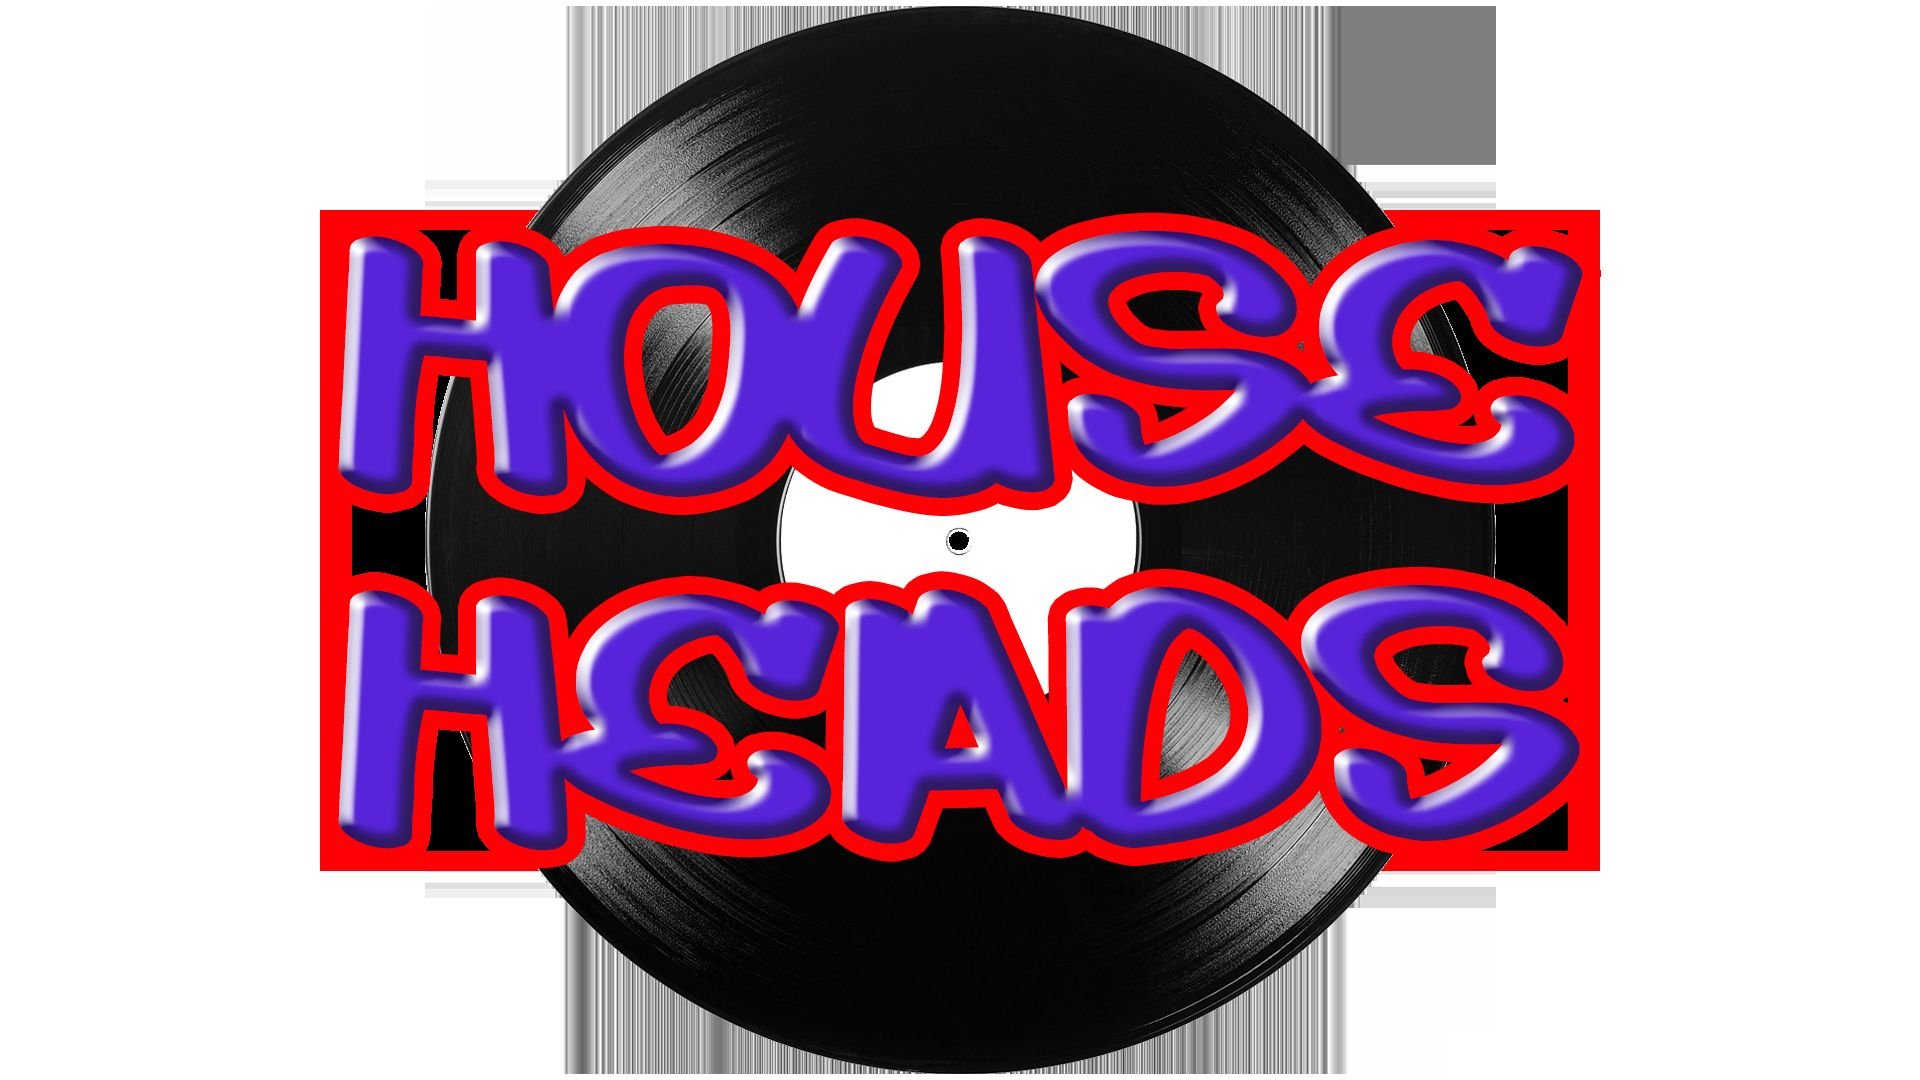 The Original HouseHeads Friday Takeover Raid # 33